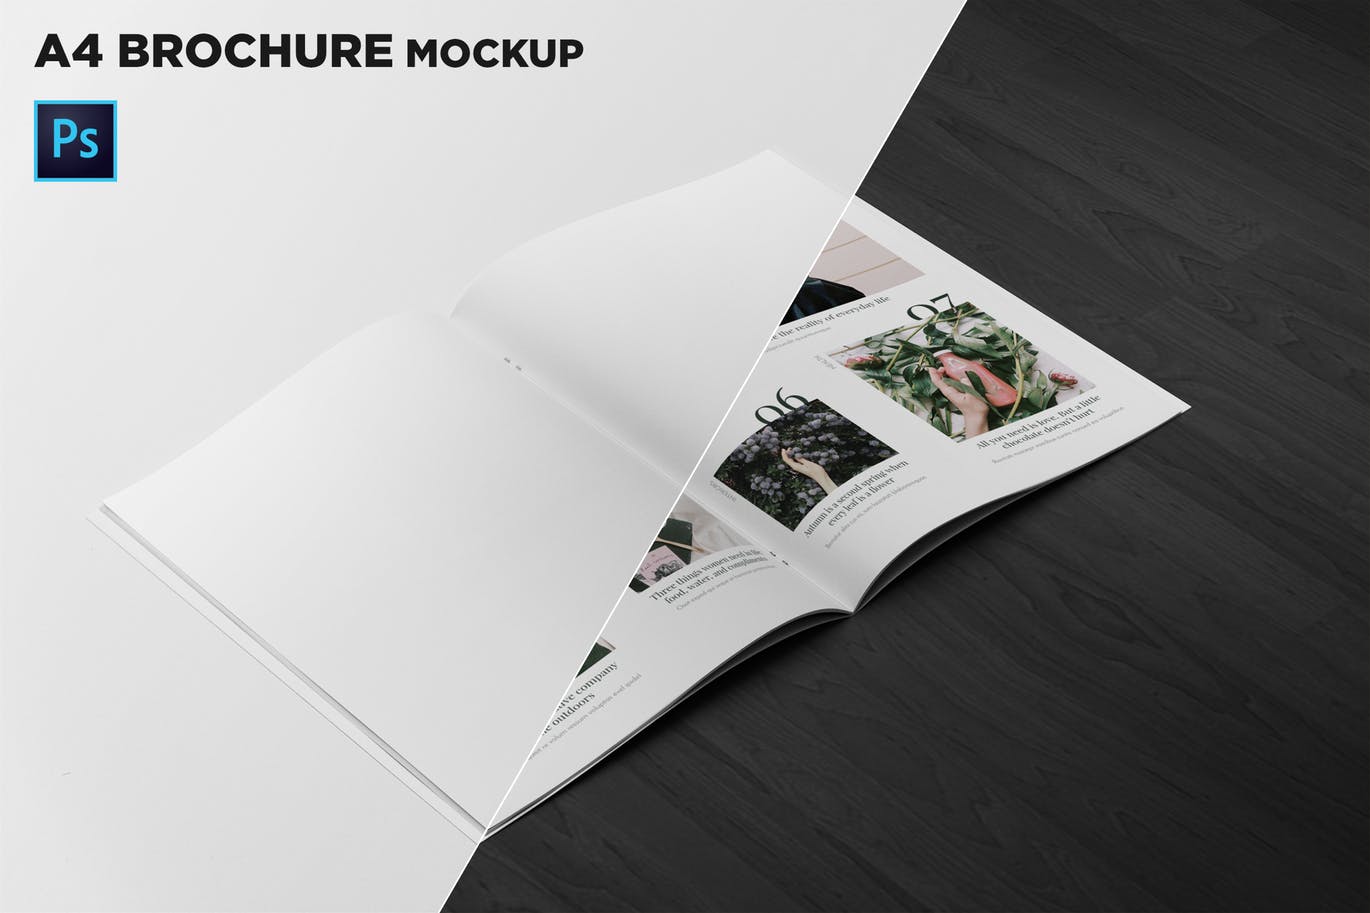 A4宣传小册子/企业画册内页版式设计45度角视图样机大洋岛精选 A4 Brochure Mockup 2 Pages Spread插图